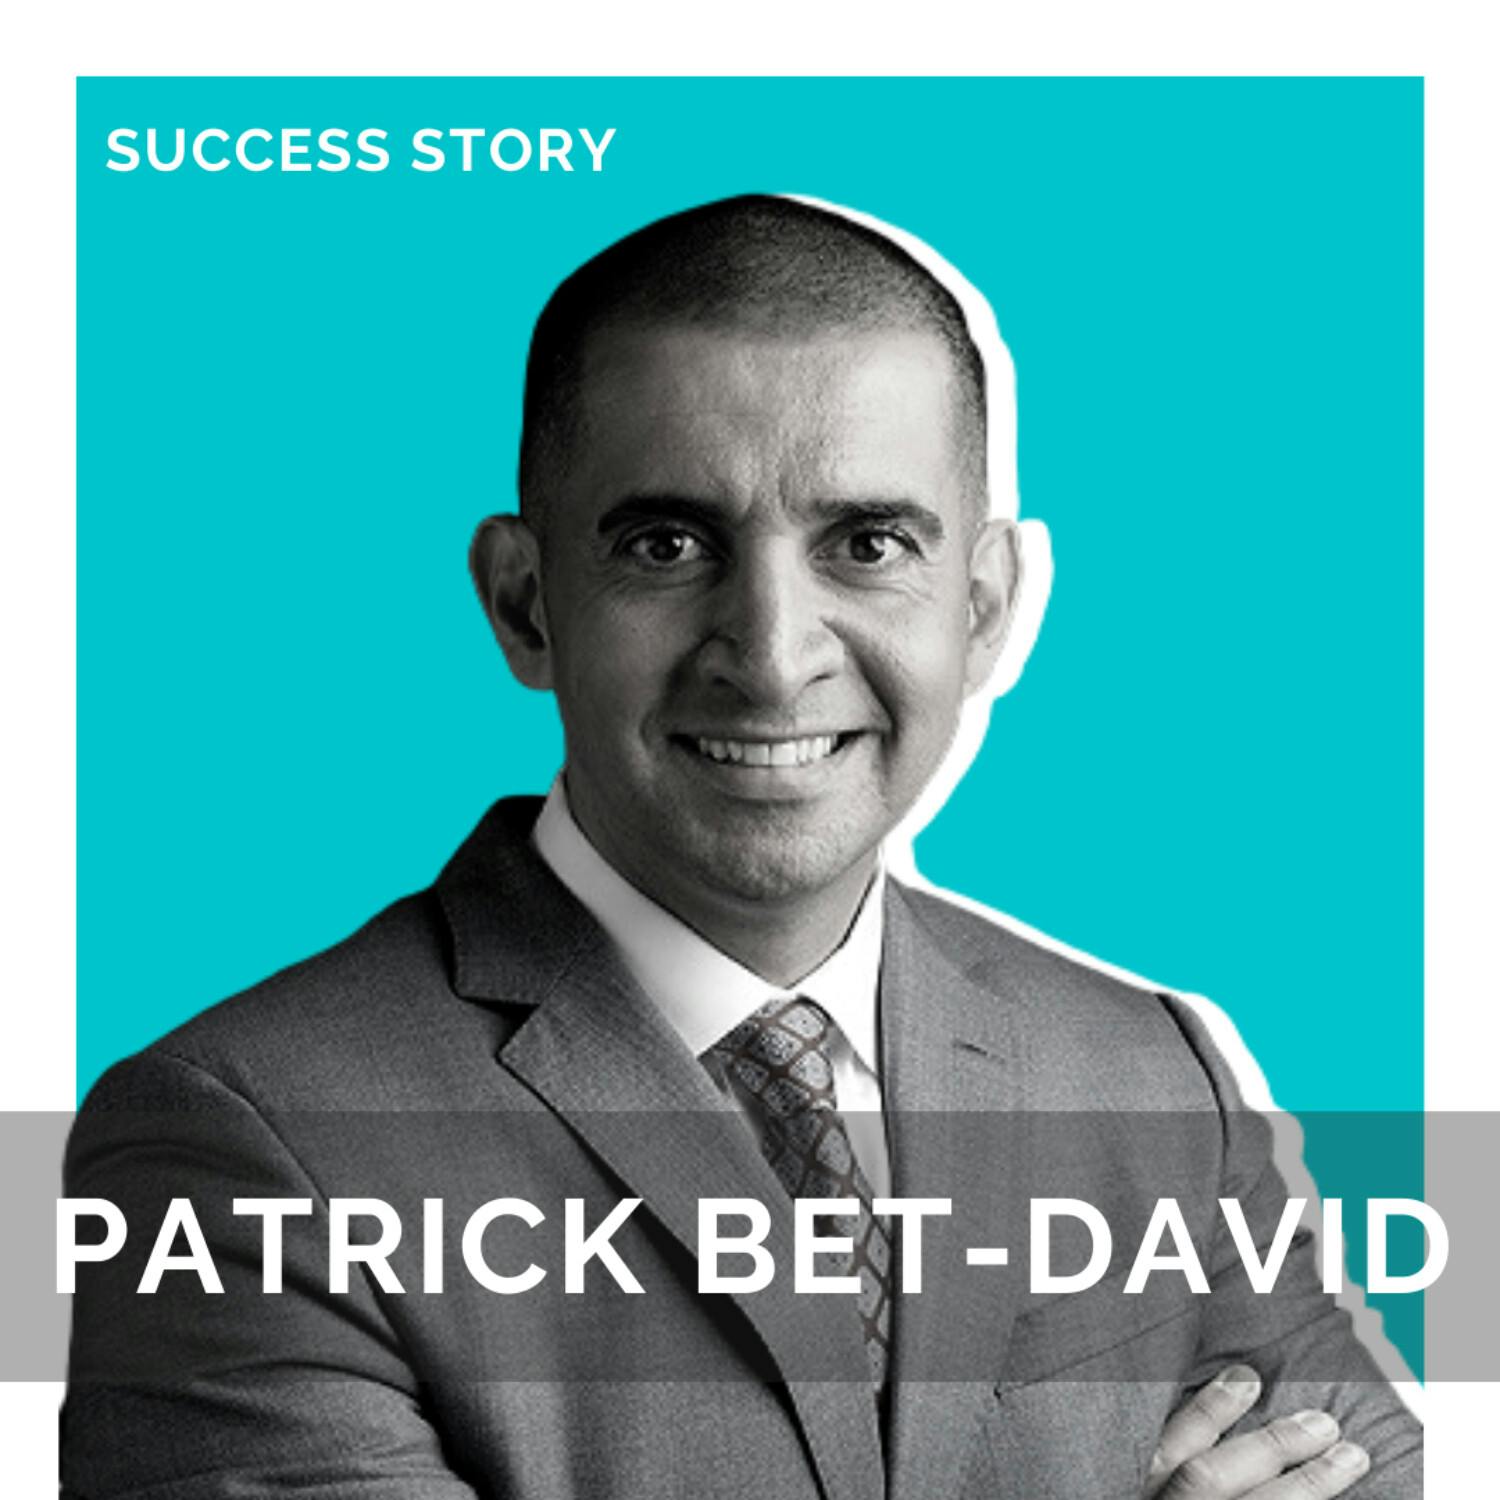 Patrick Bet-David, CEO of Valuetainment